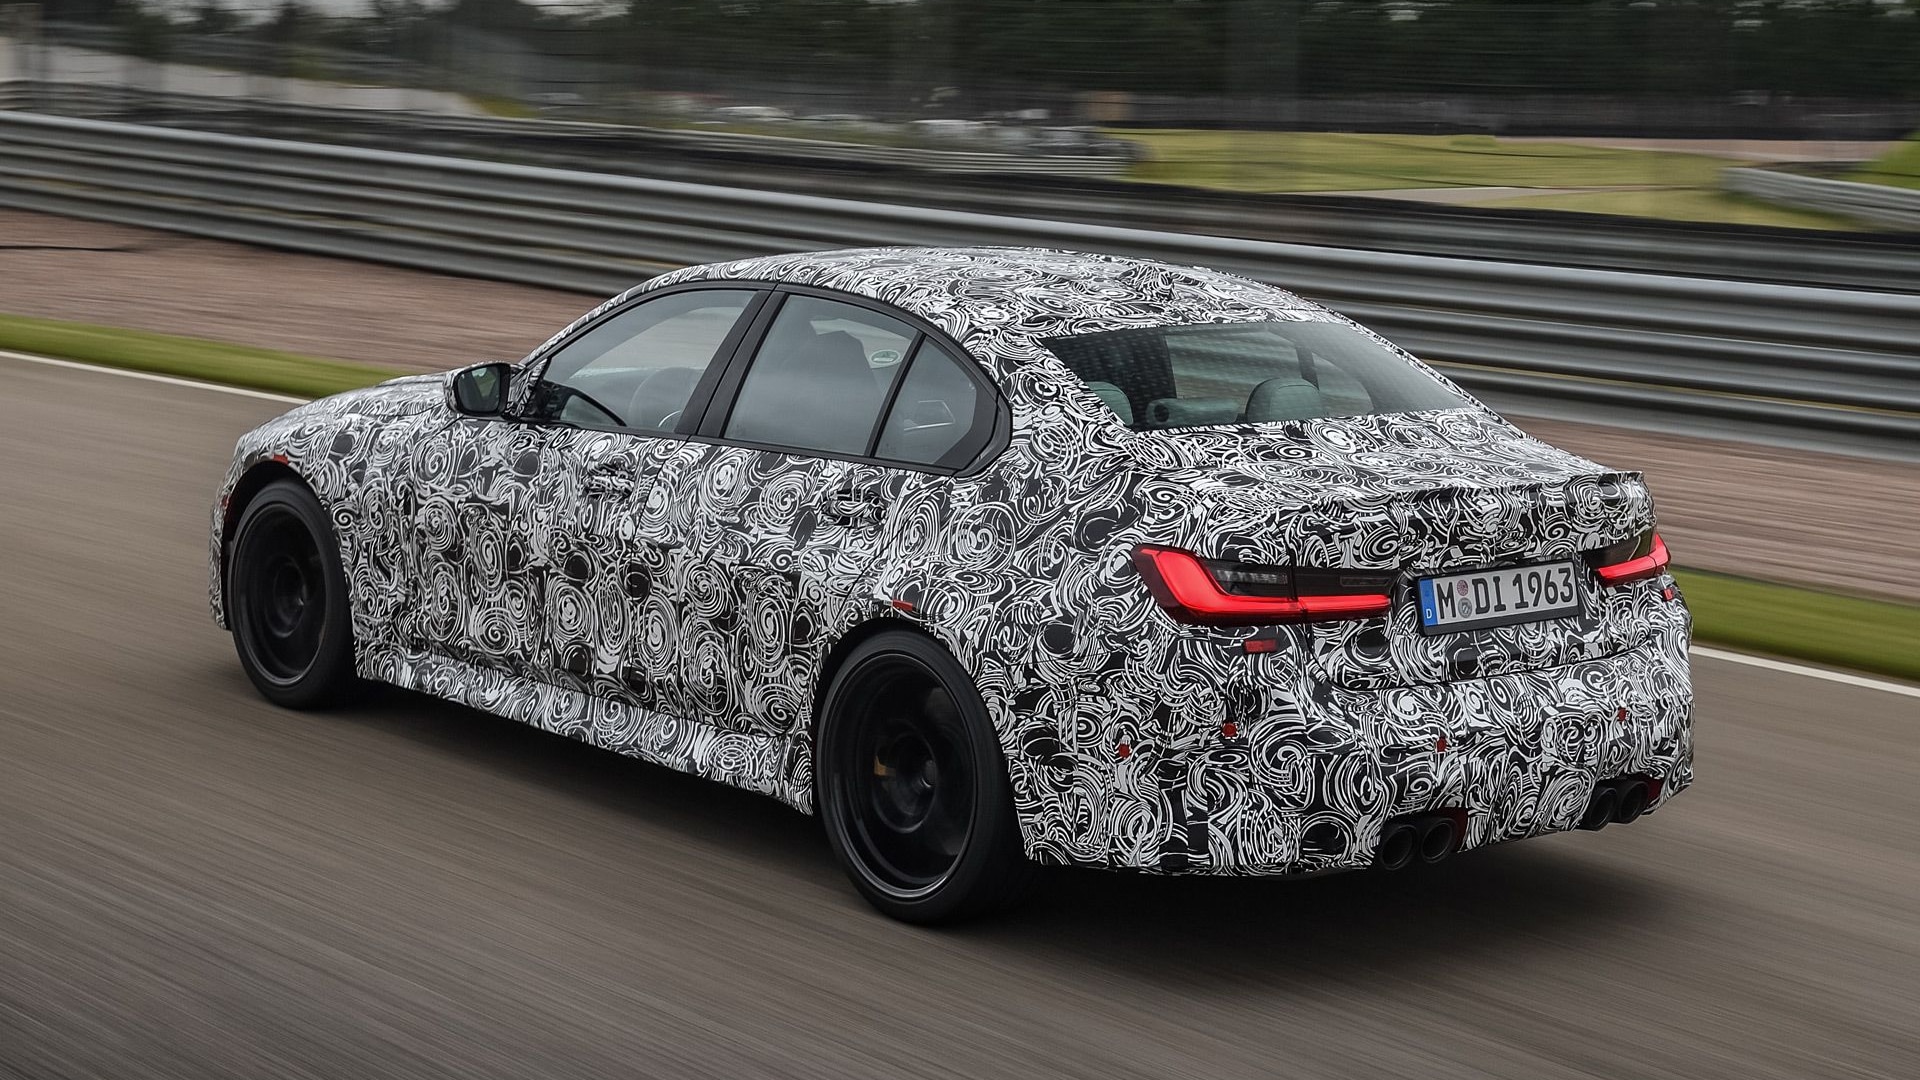 Teaser for BMW M3 debuting in September 2020